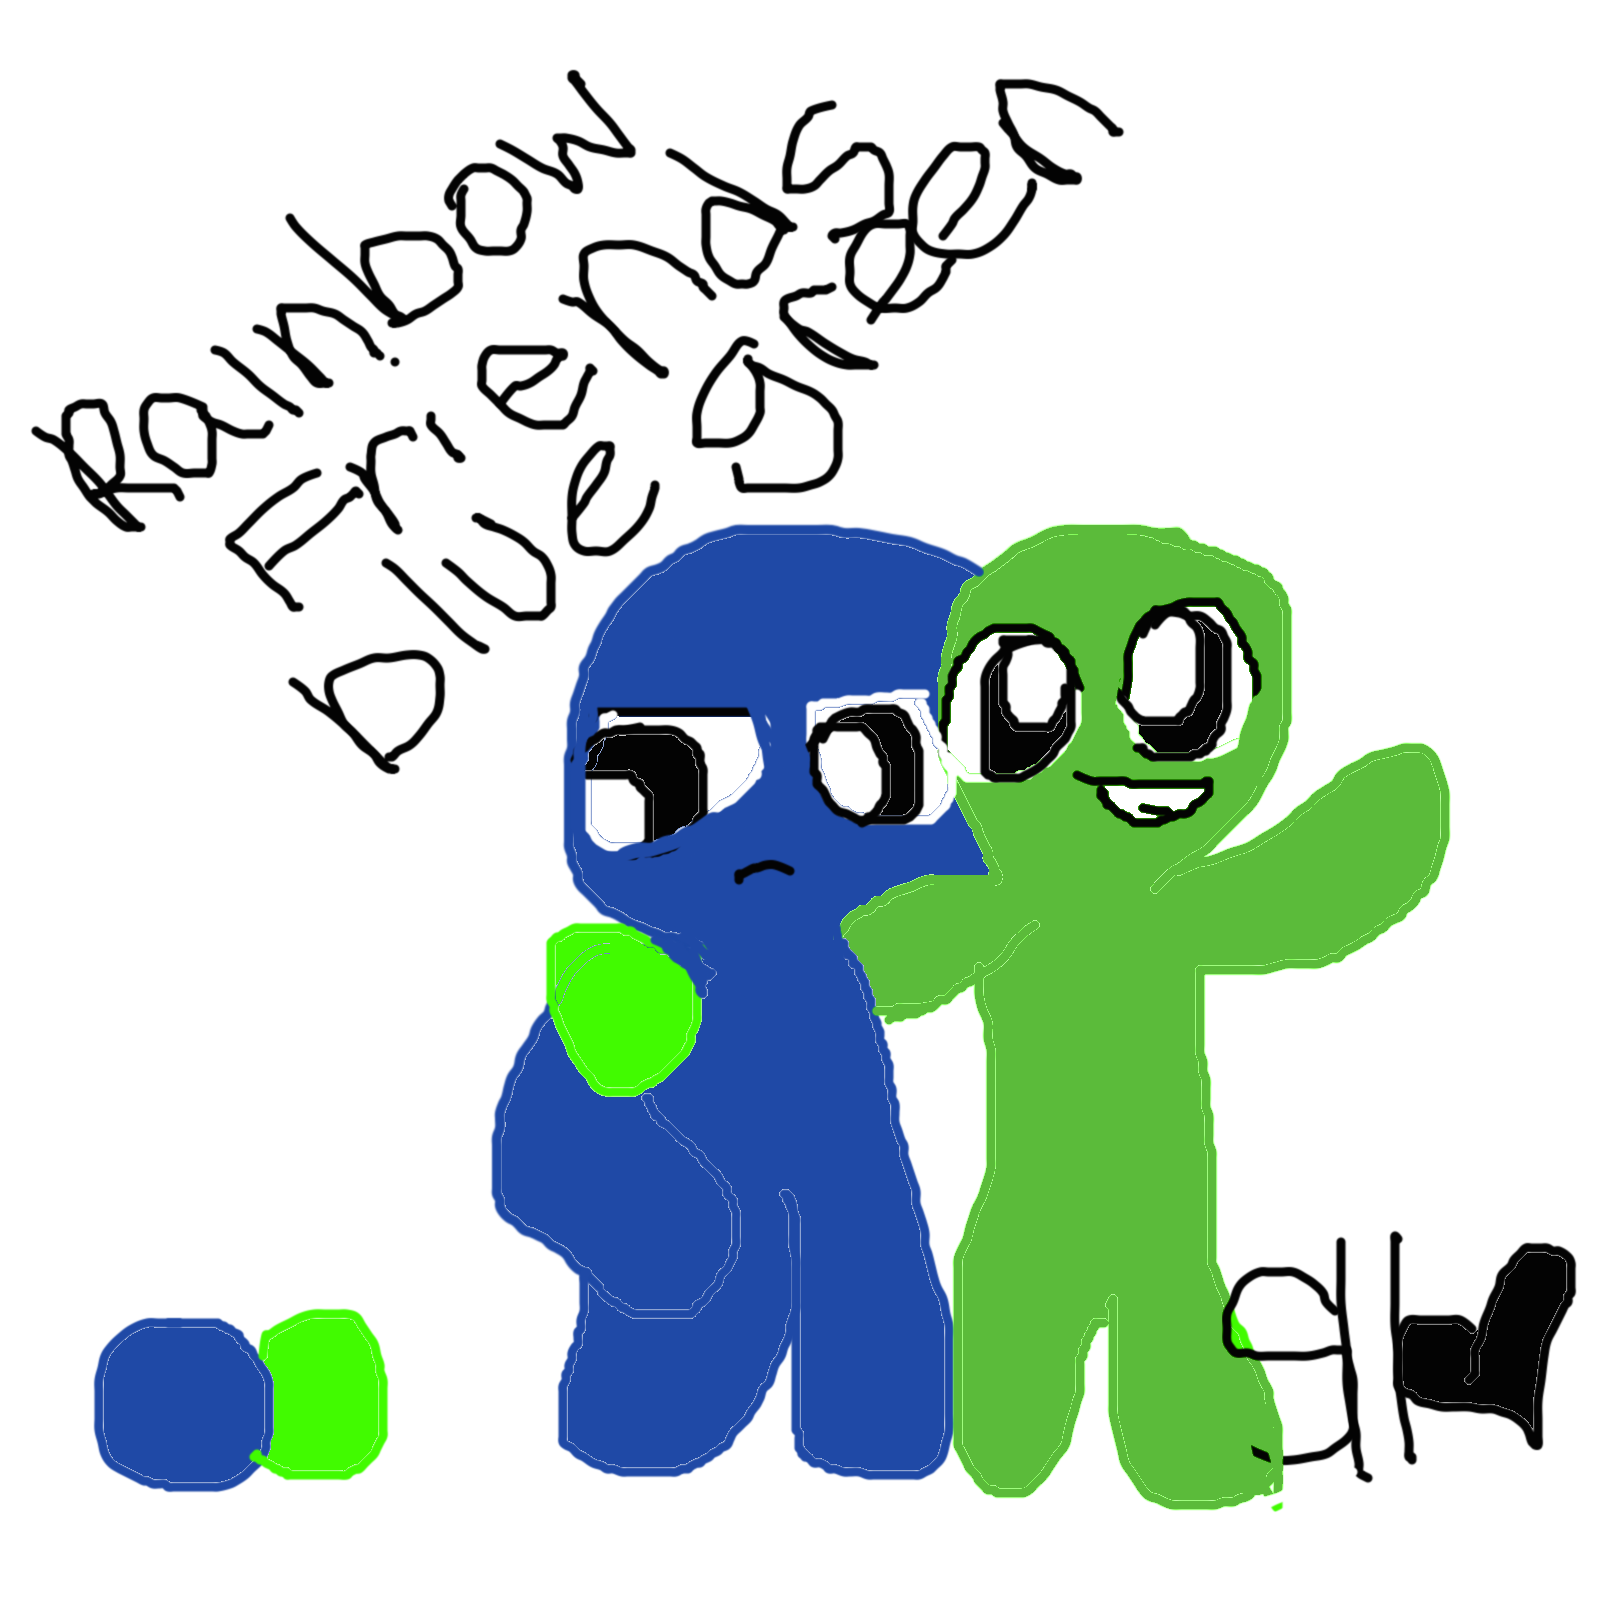 Blue and Green - Rainbow friends : r/RainbowFriends